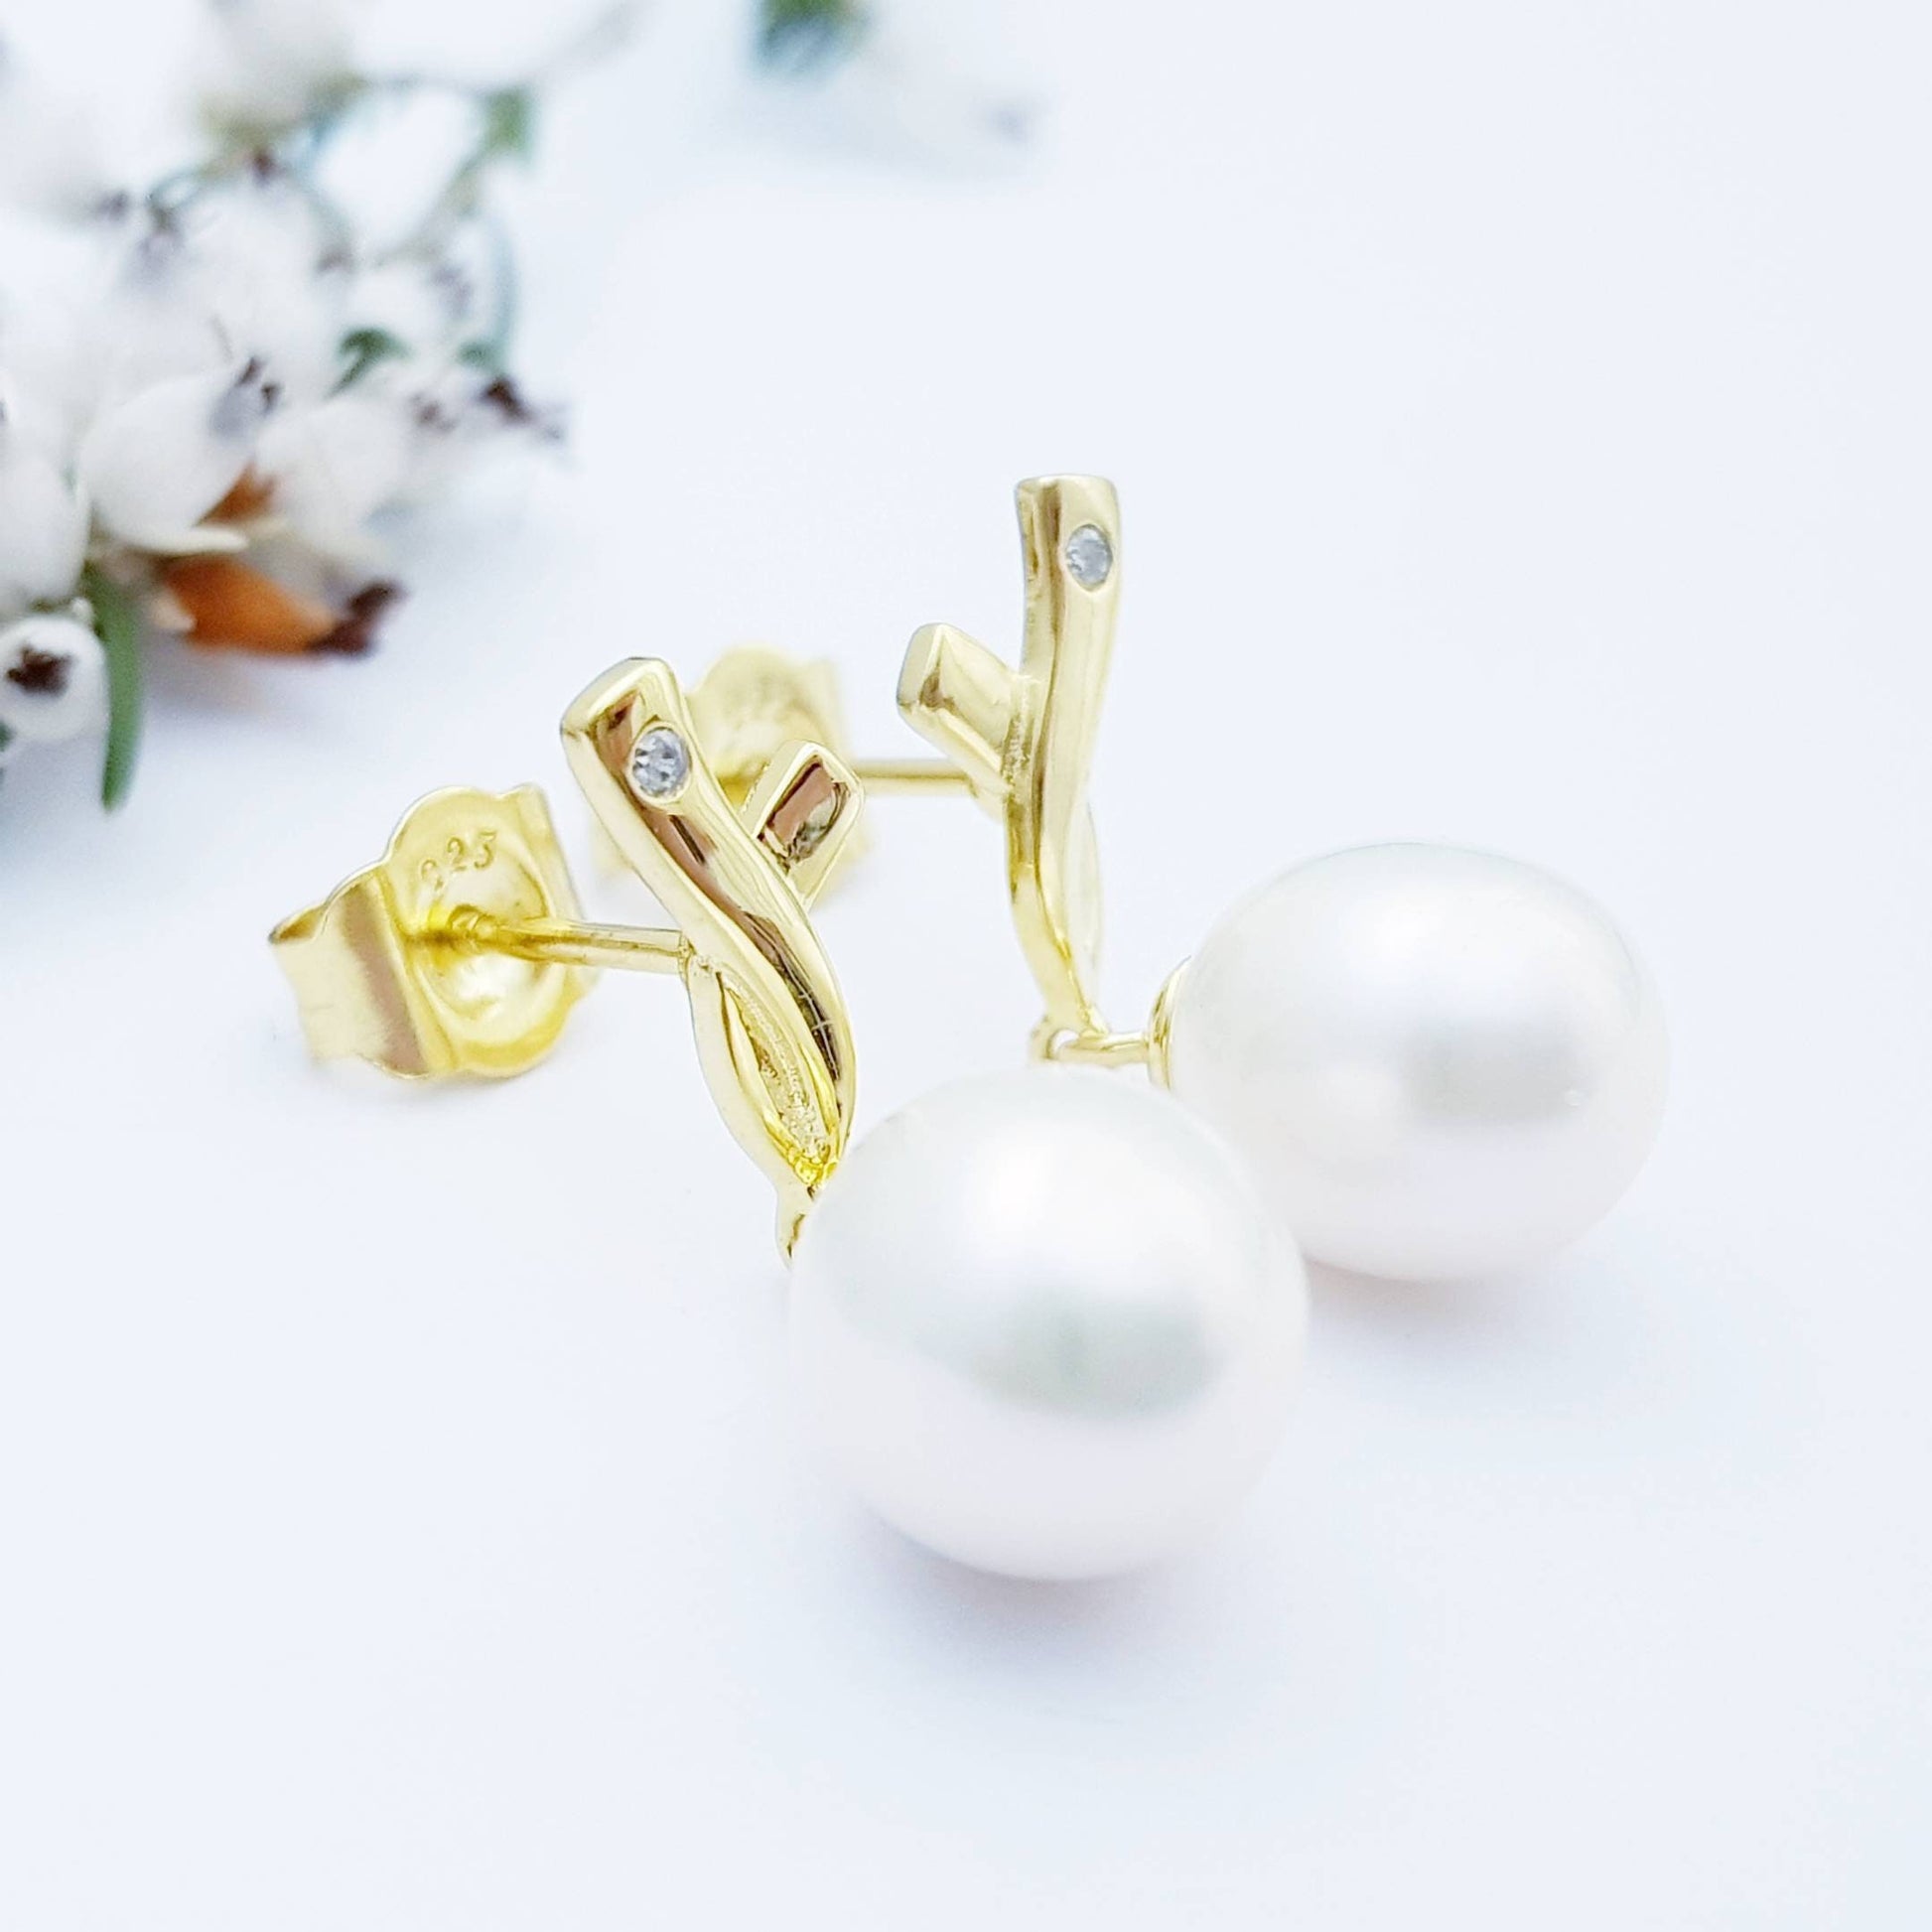 Drop pearl earrings with freshwater pearl